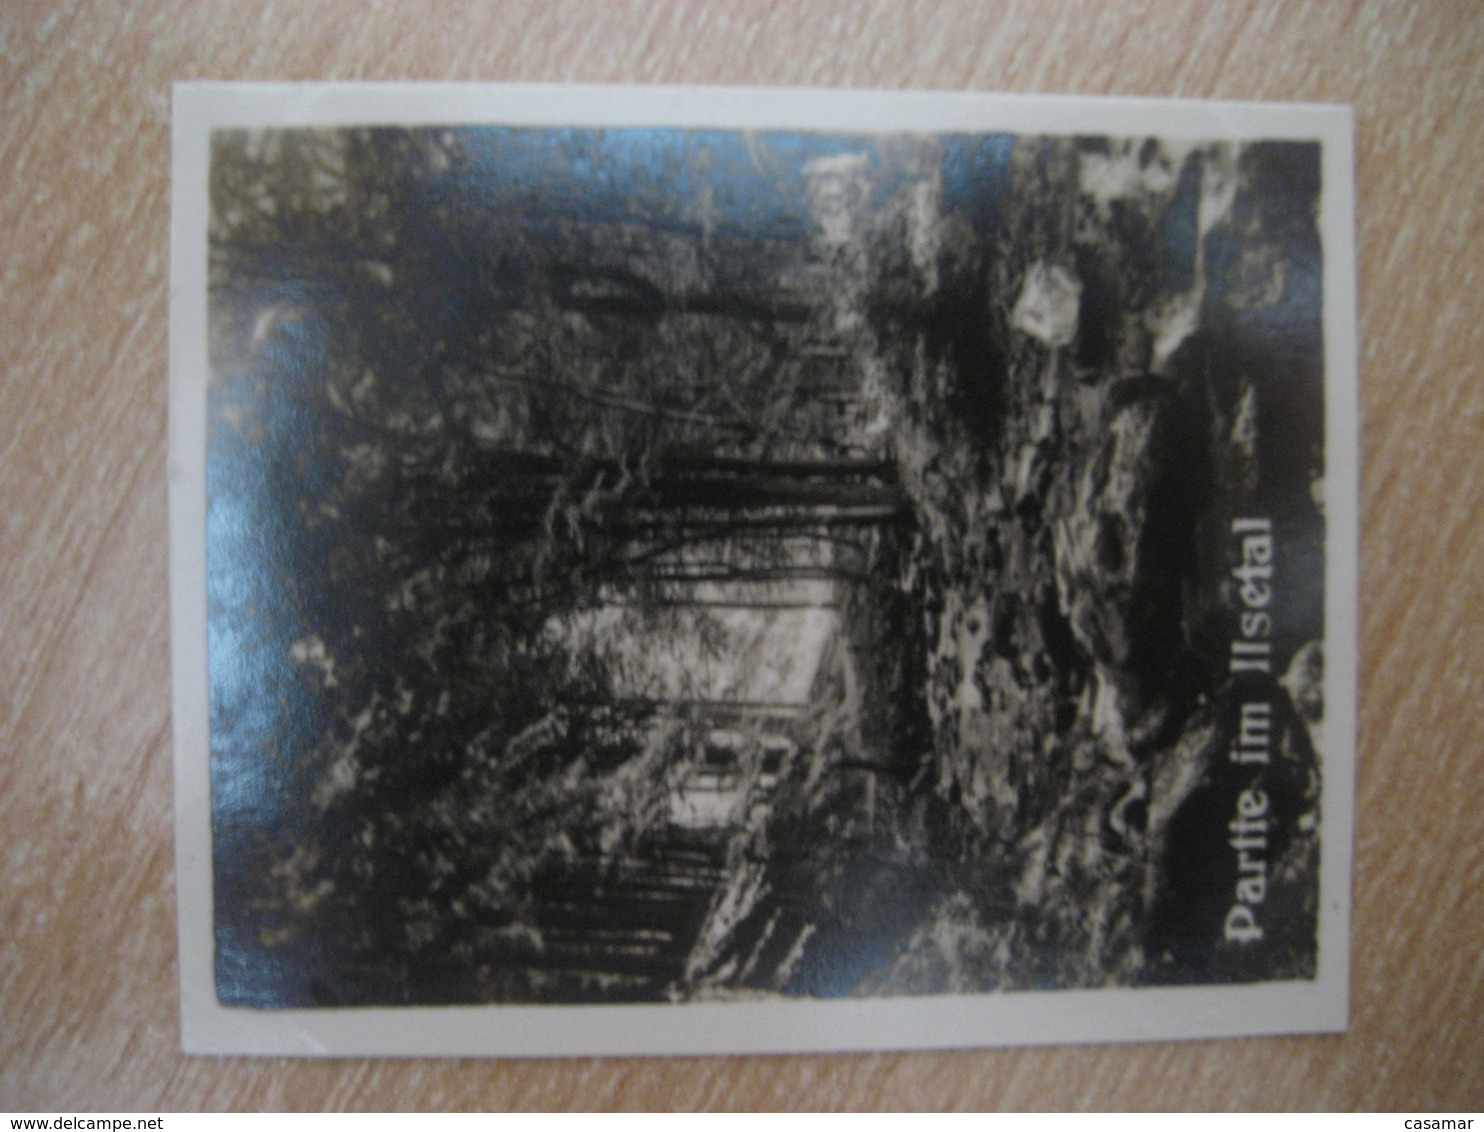 ILSENBURG Partie Im ILSETAL Bilder Card Photo Photography (4x5,2cm) Harz Mountains GERMANY 30s Tobacco - Non Classificati